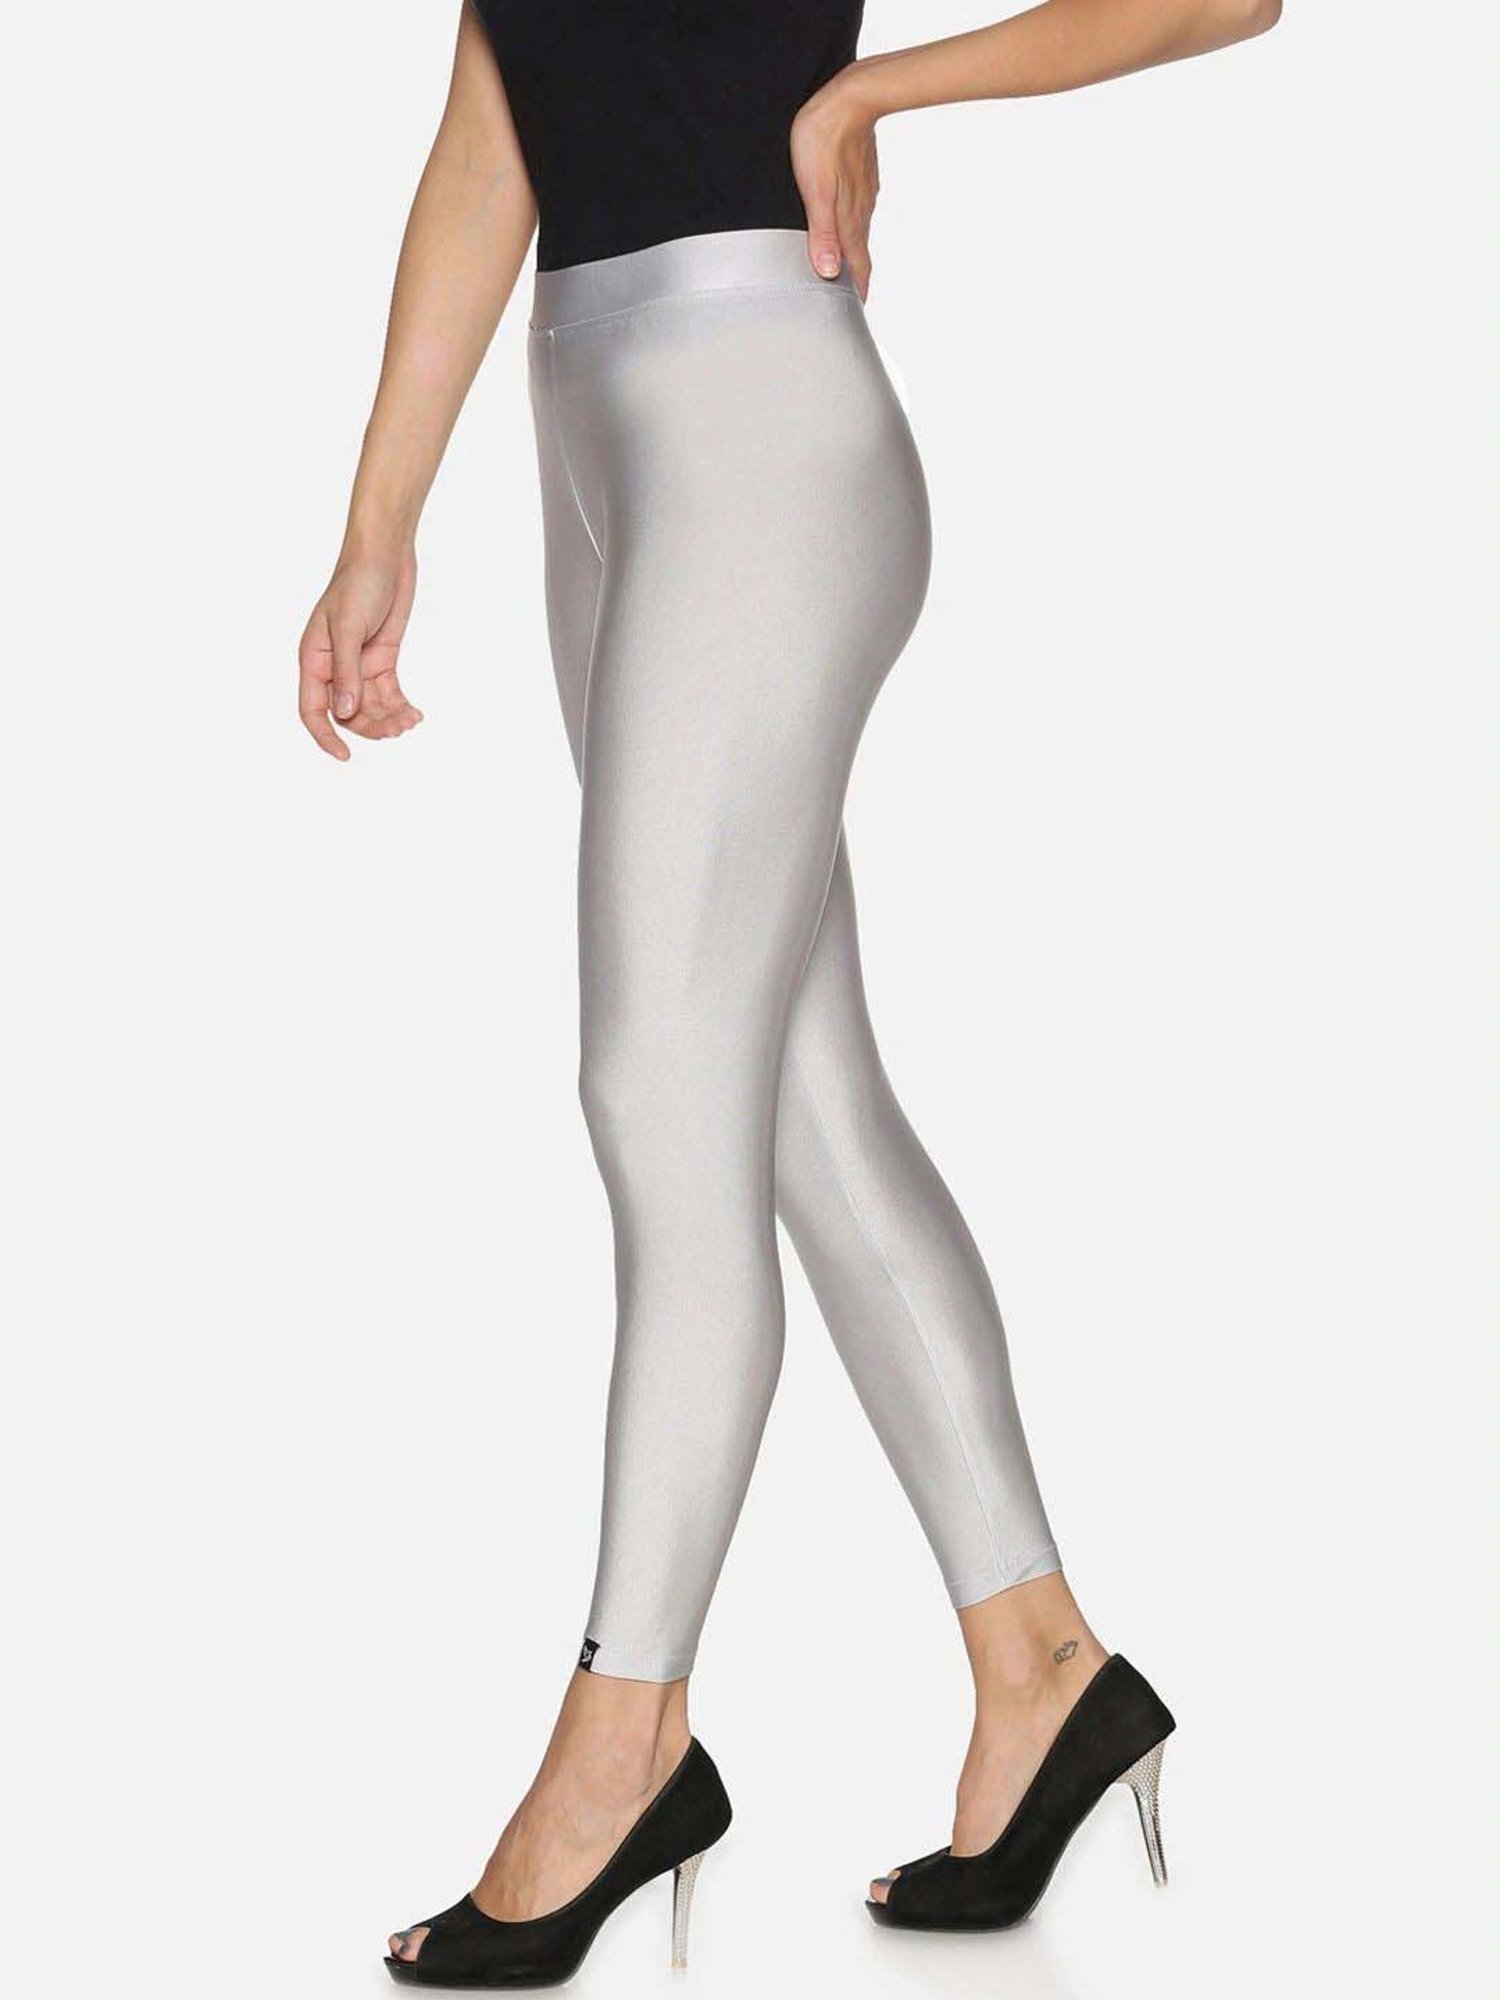 Womens Metallic Silver Leggings | Adults Silver lamé Costume Leggings